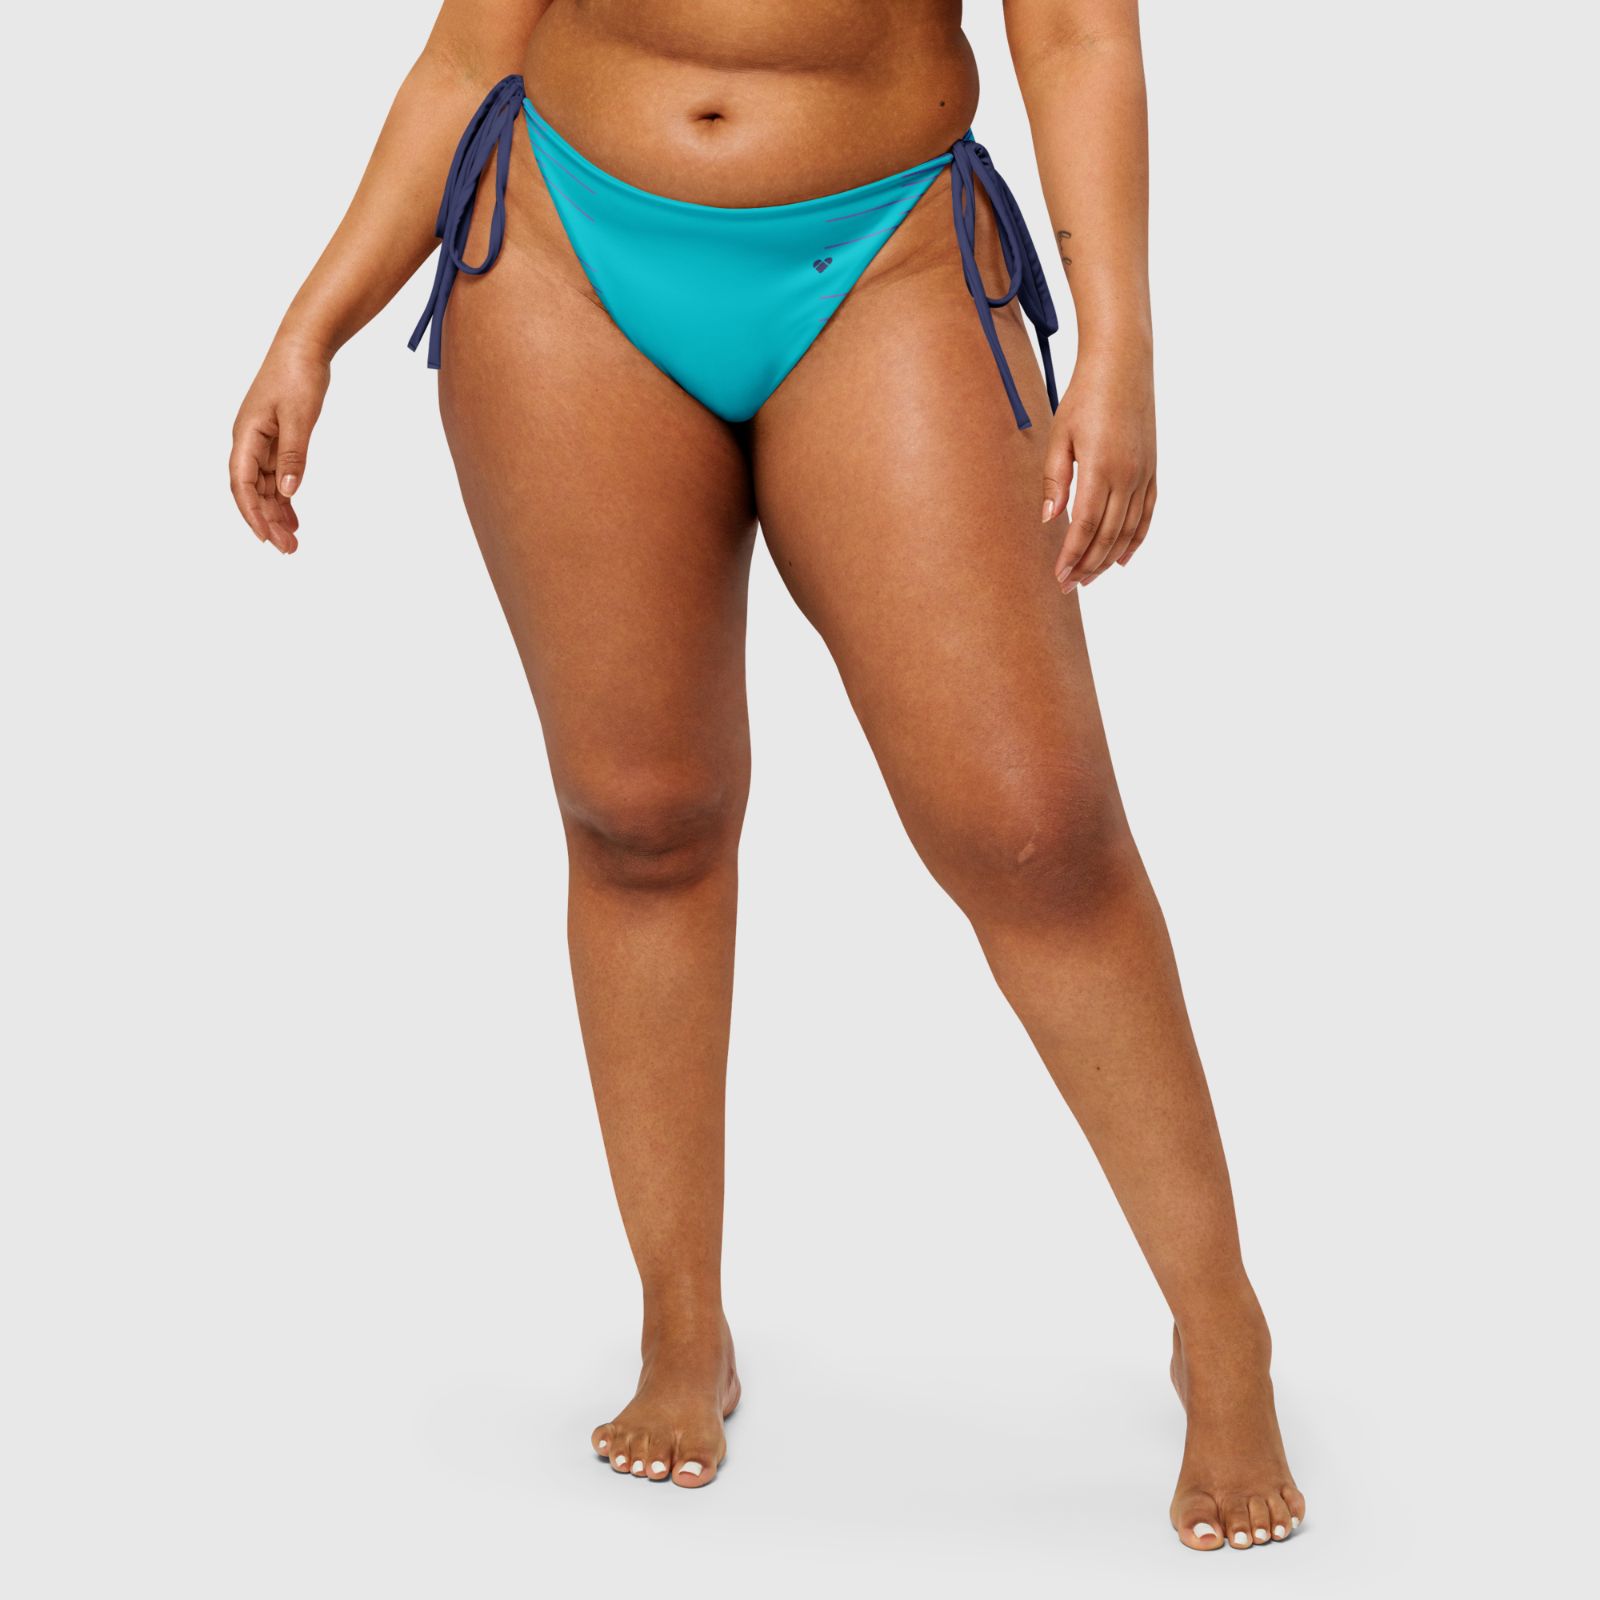 Women's Bikini Bottom in Turquoise by CRiZ AMOR